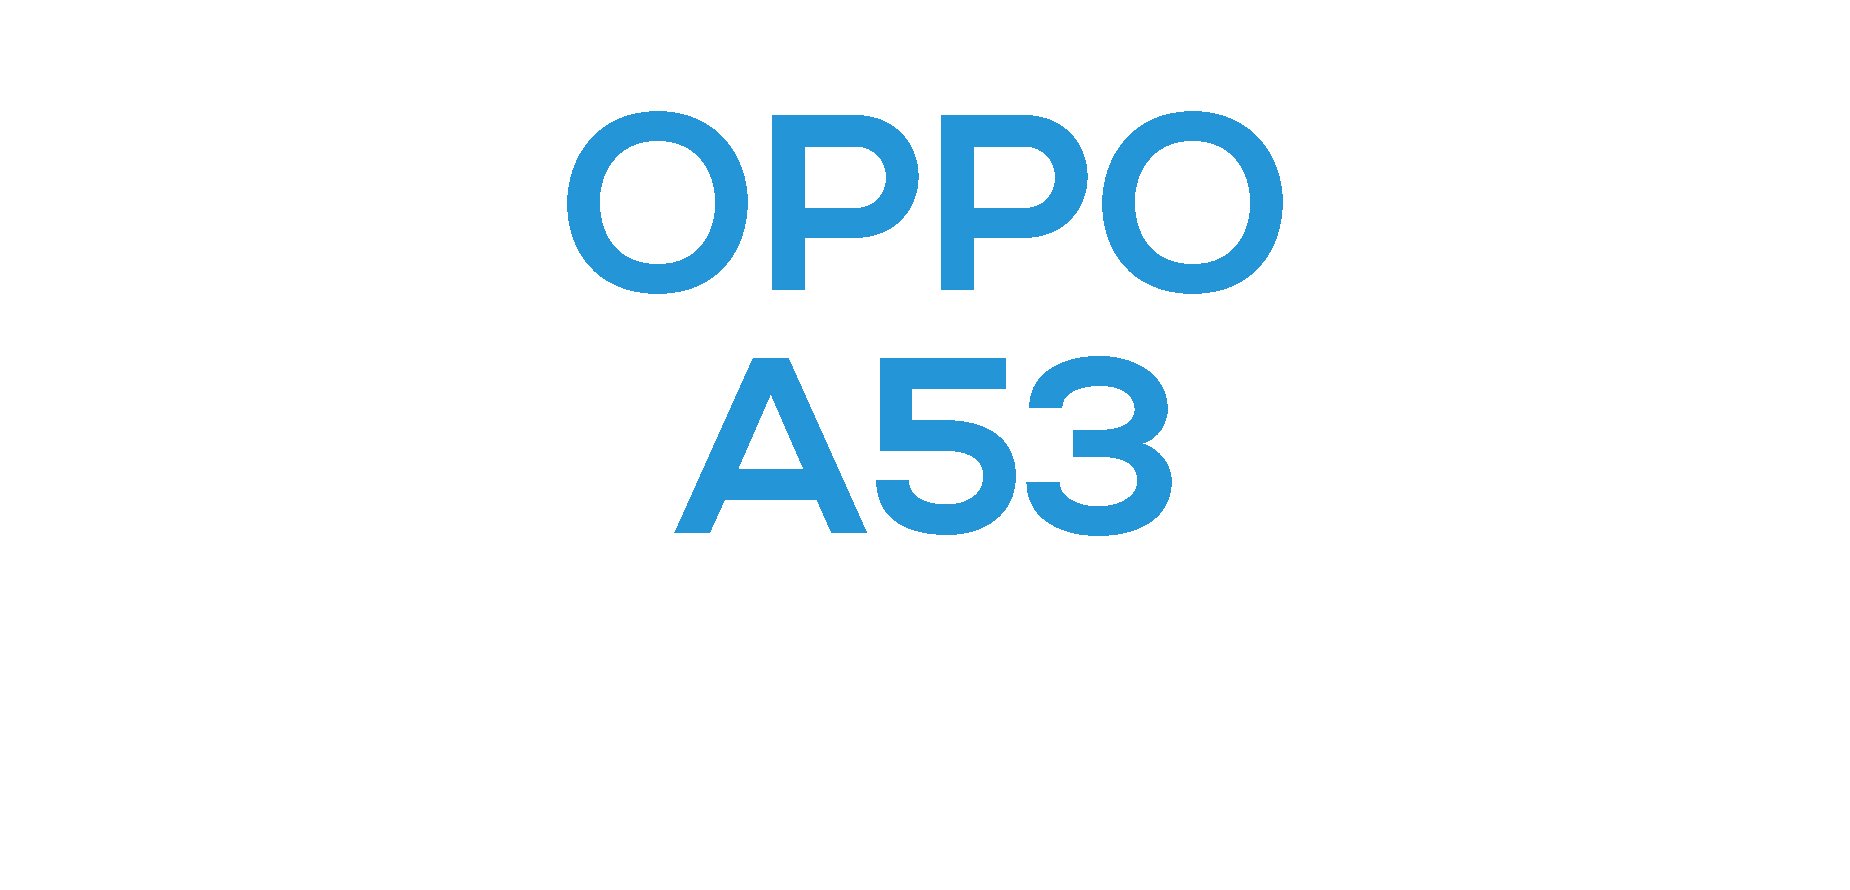 OPPO A53